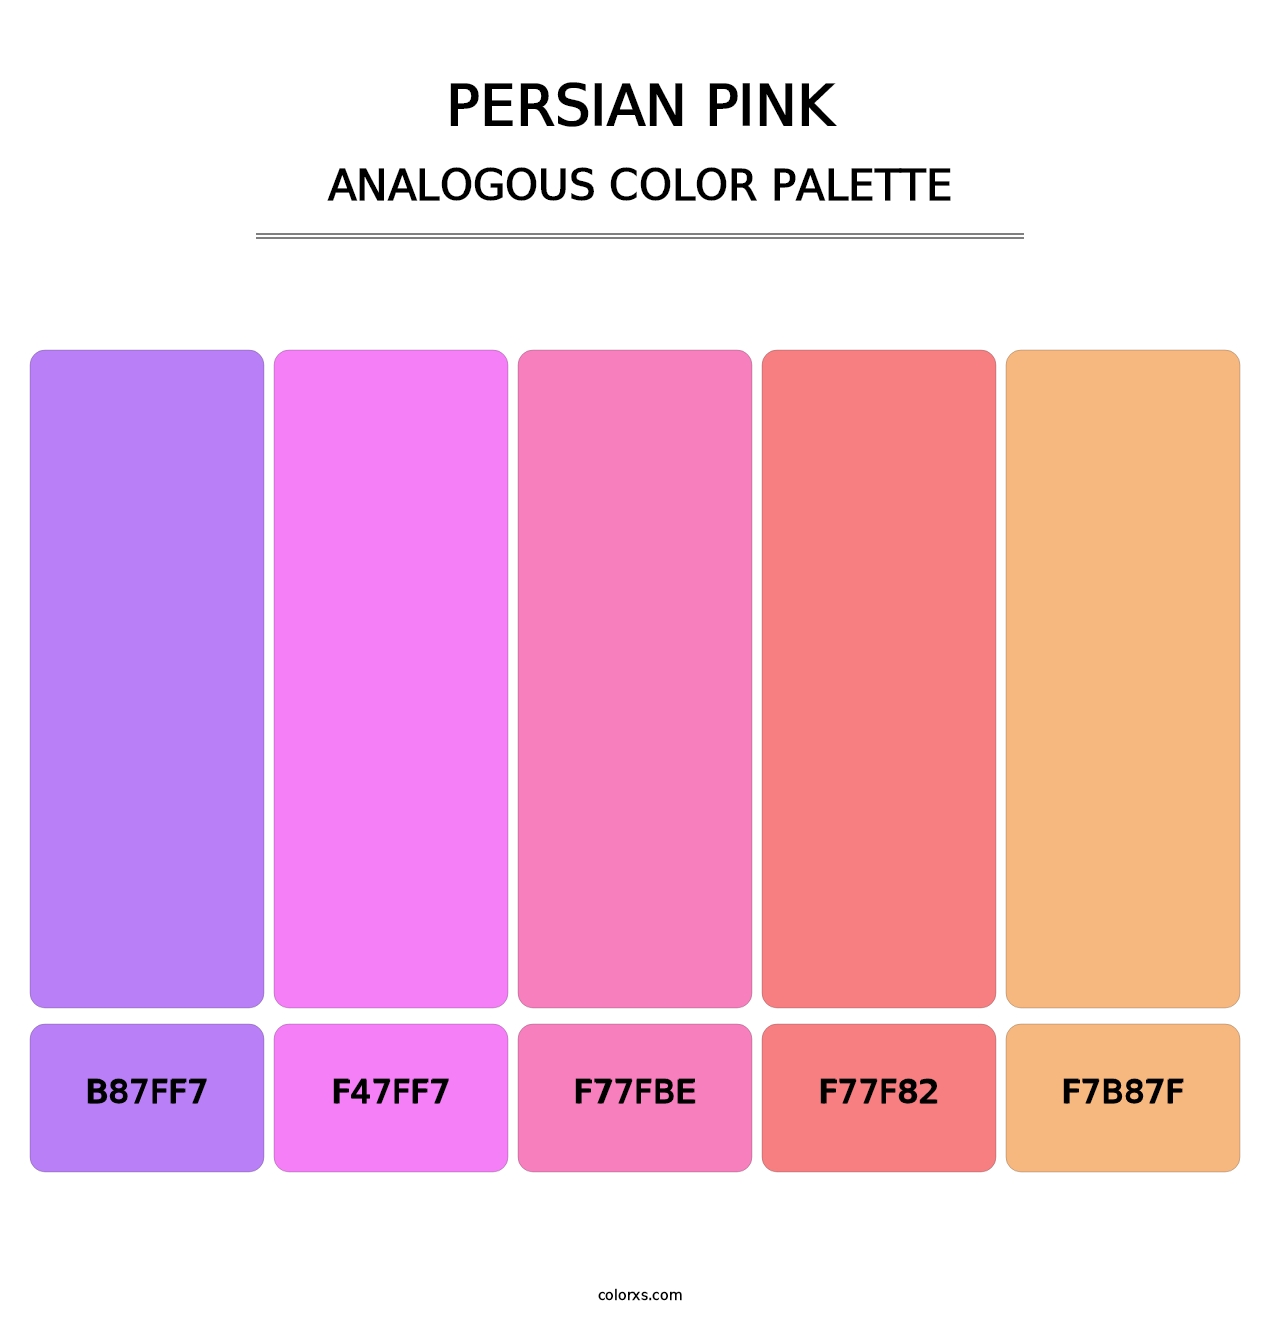 Persian Pink - Analogous Color Palette